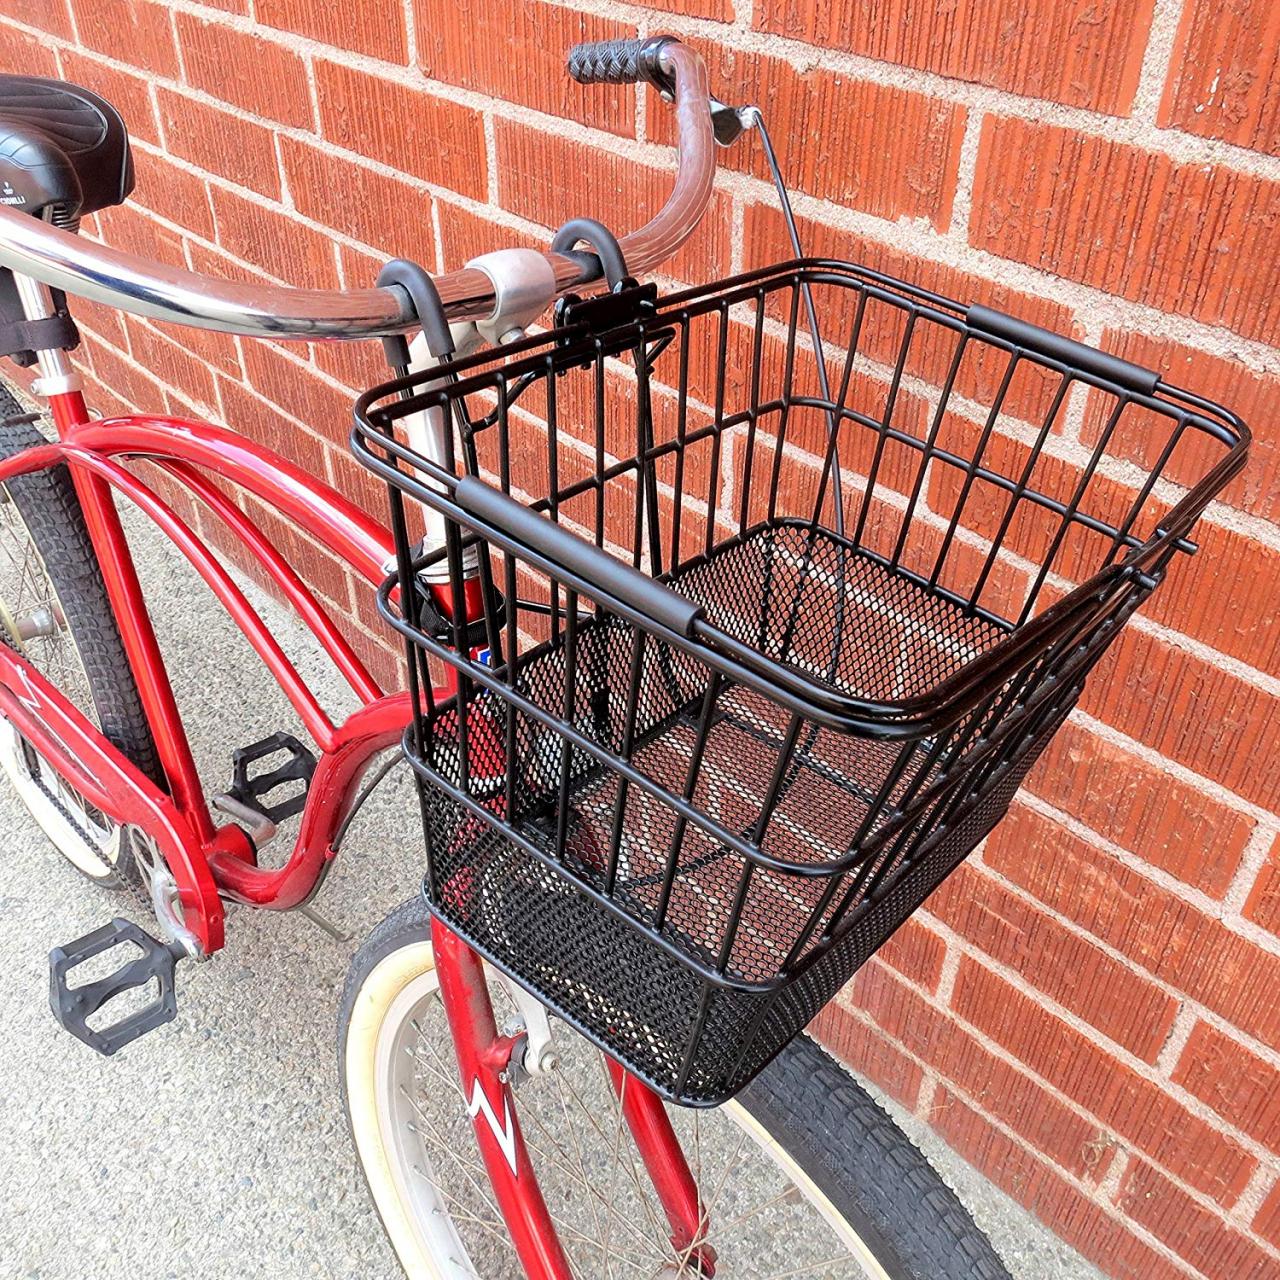 retrospec bike basket off 65% - medpharmres.com